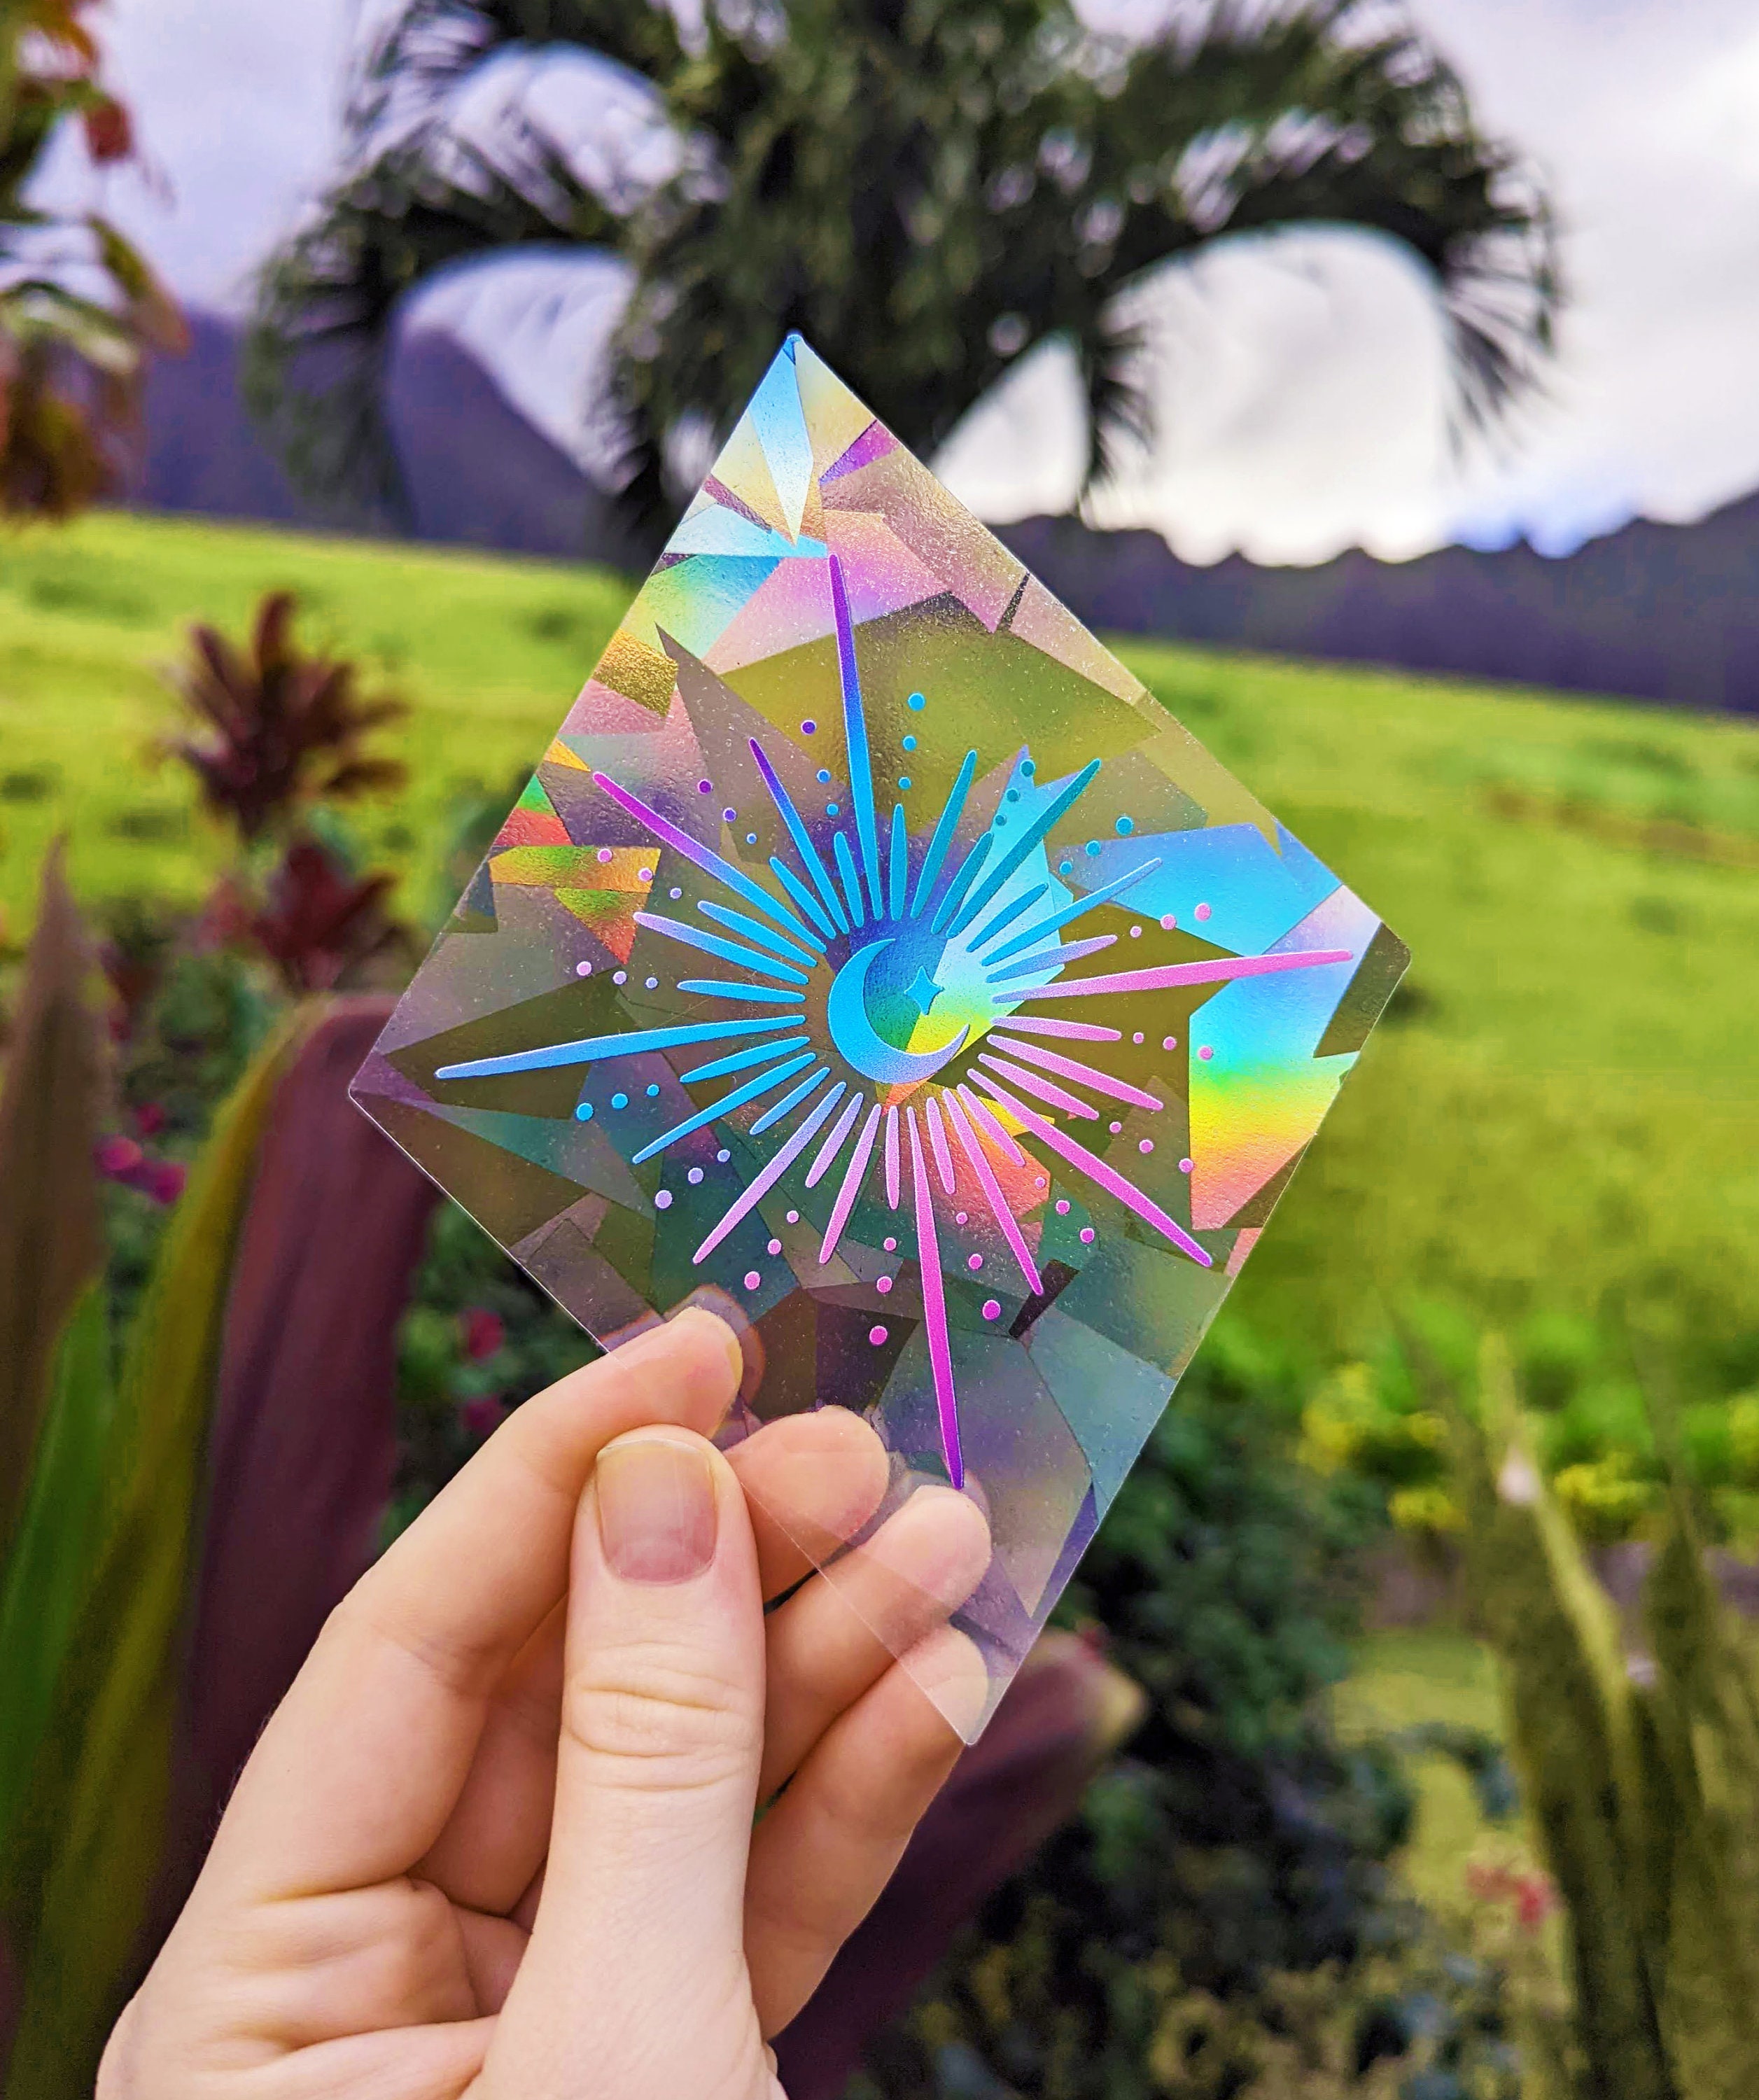 NEW Sun Goddess Diamond Suncatcher Sticker Window Decal Rainbow Maker  Celestial Aesthetic Sun Catcher Sticker 5.5 